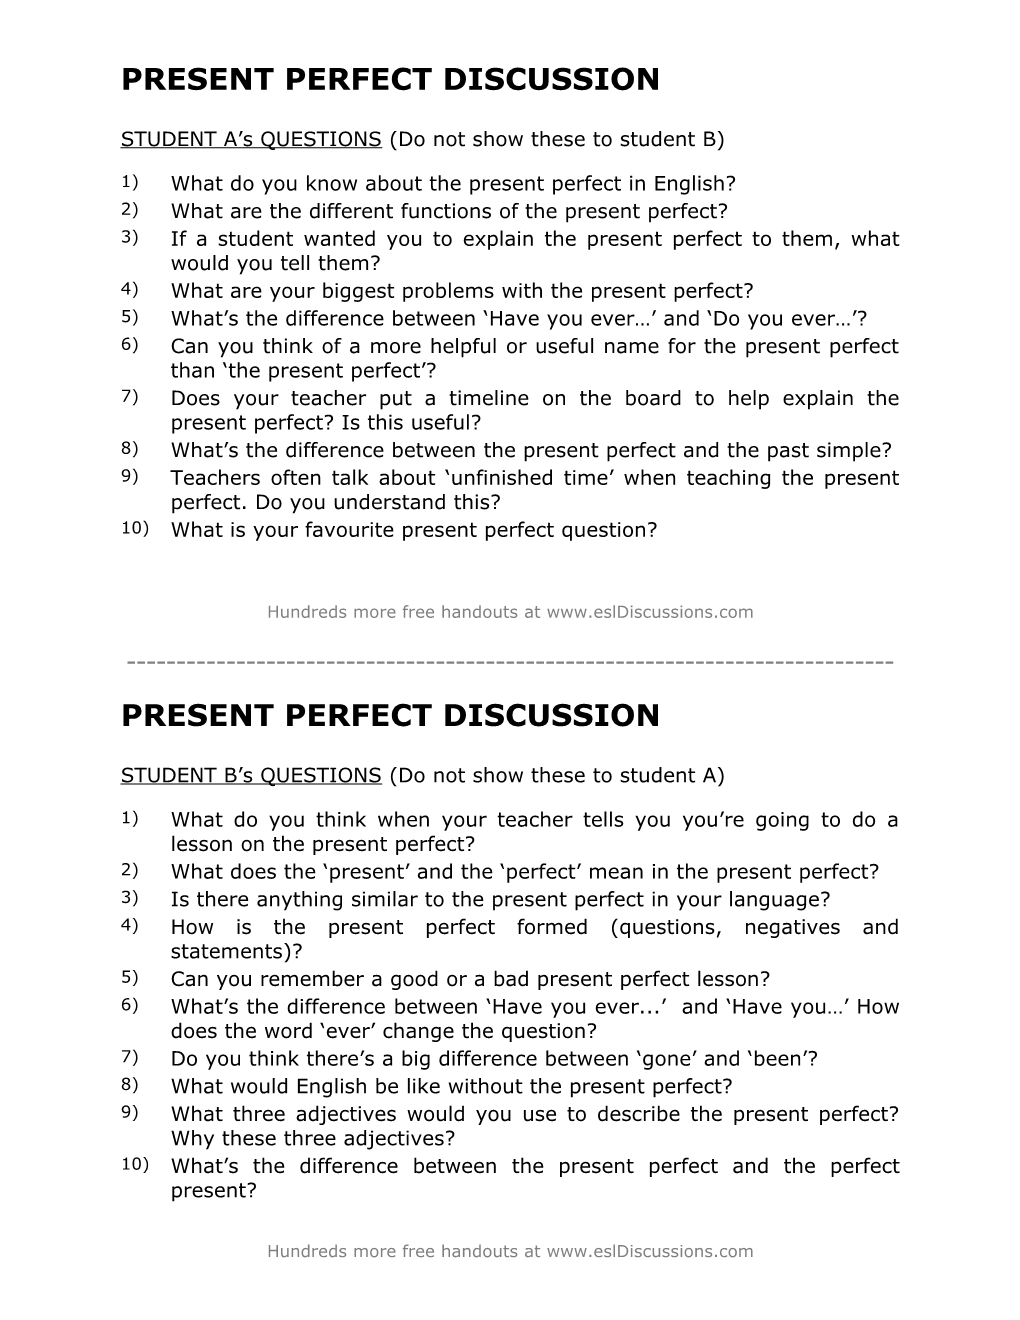 ESL Conversation Lesson On The Present Perfect Tense